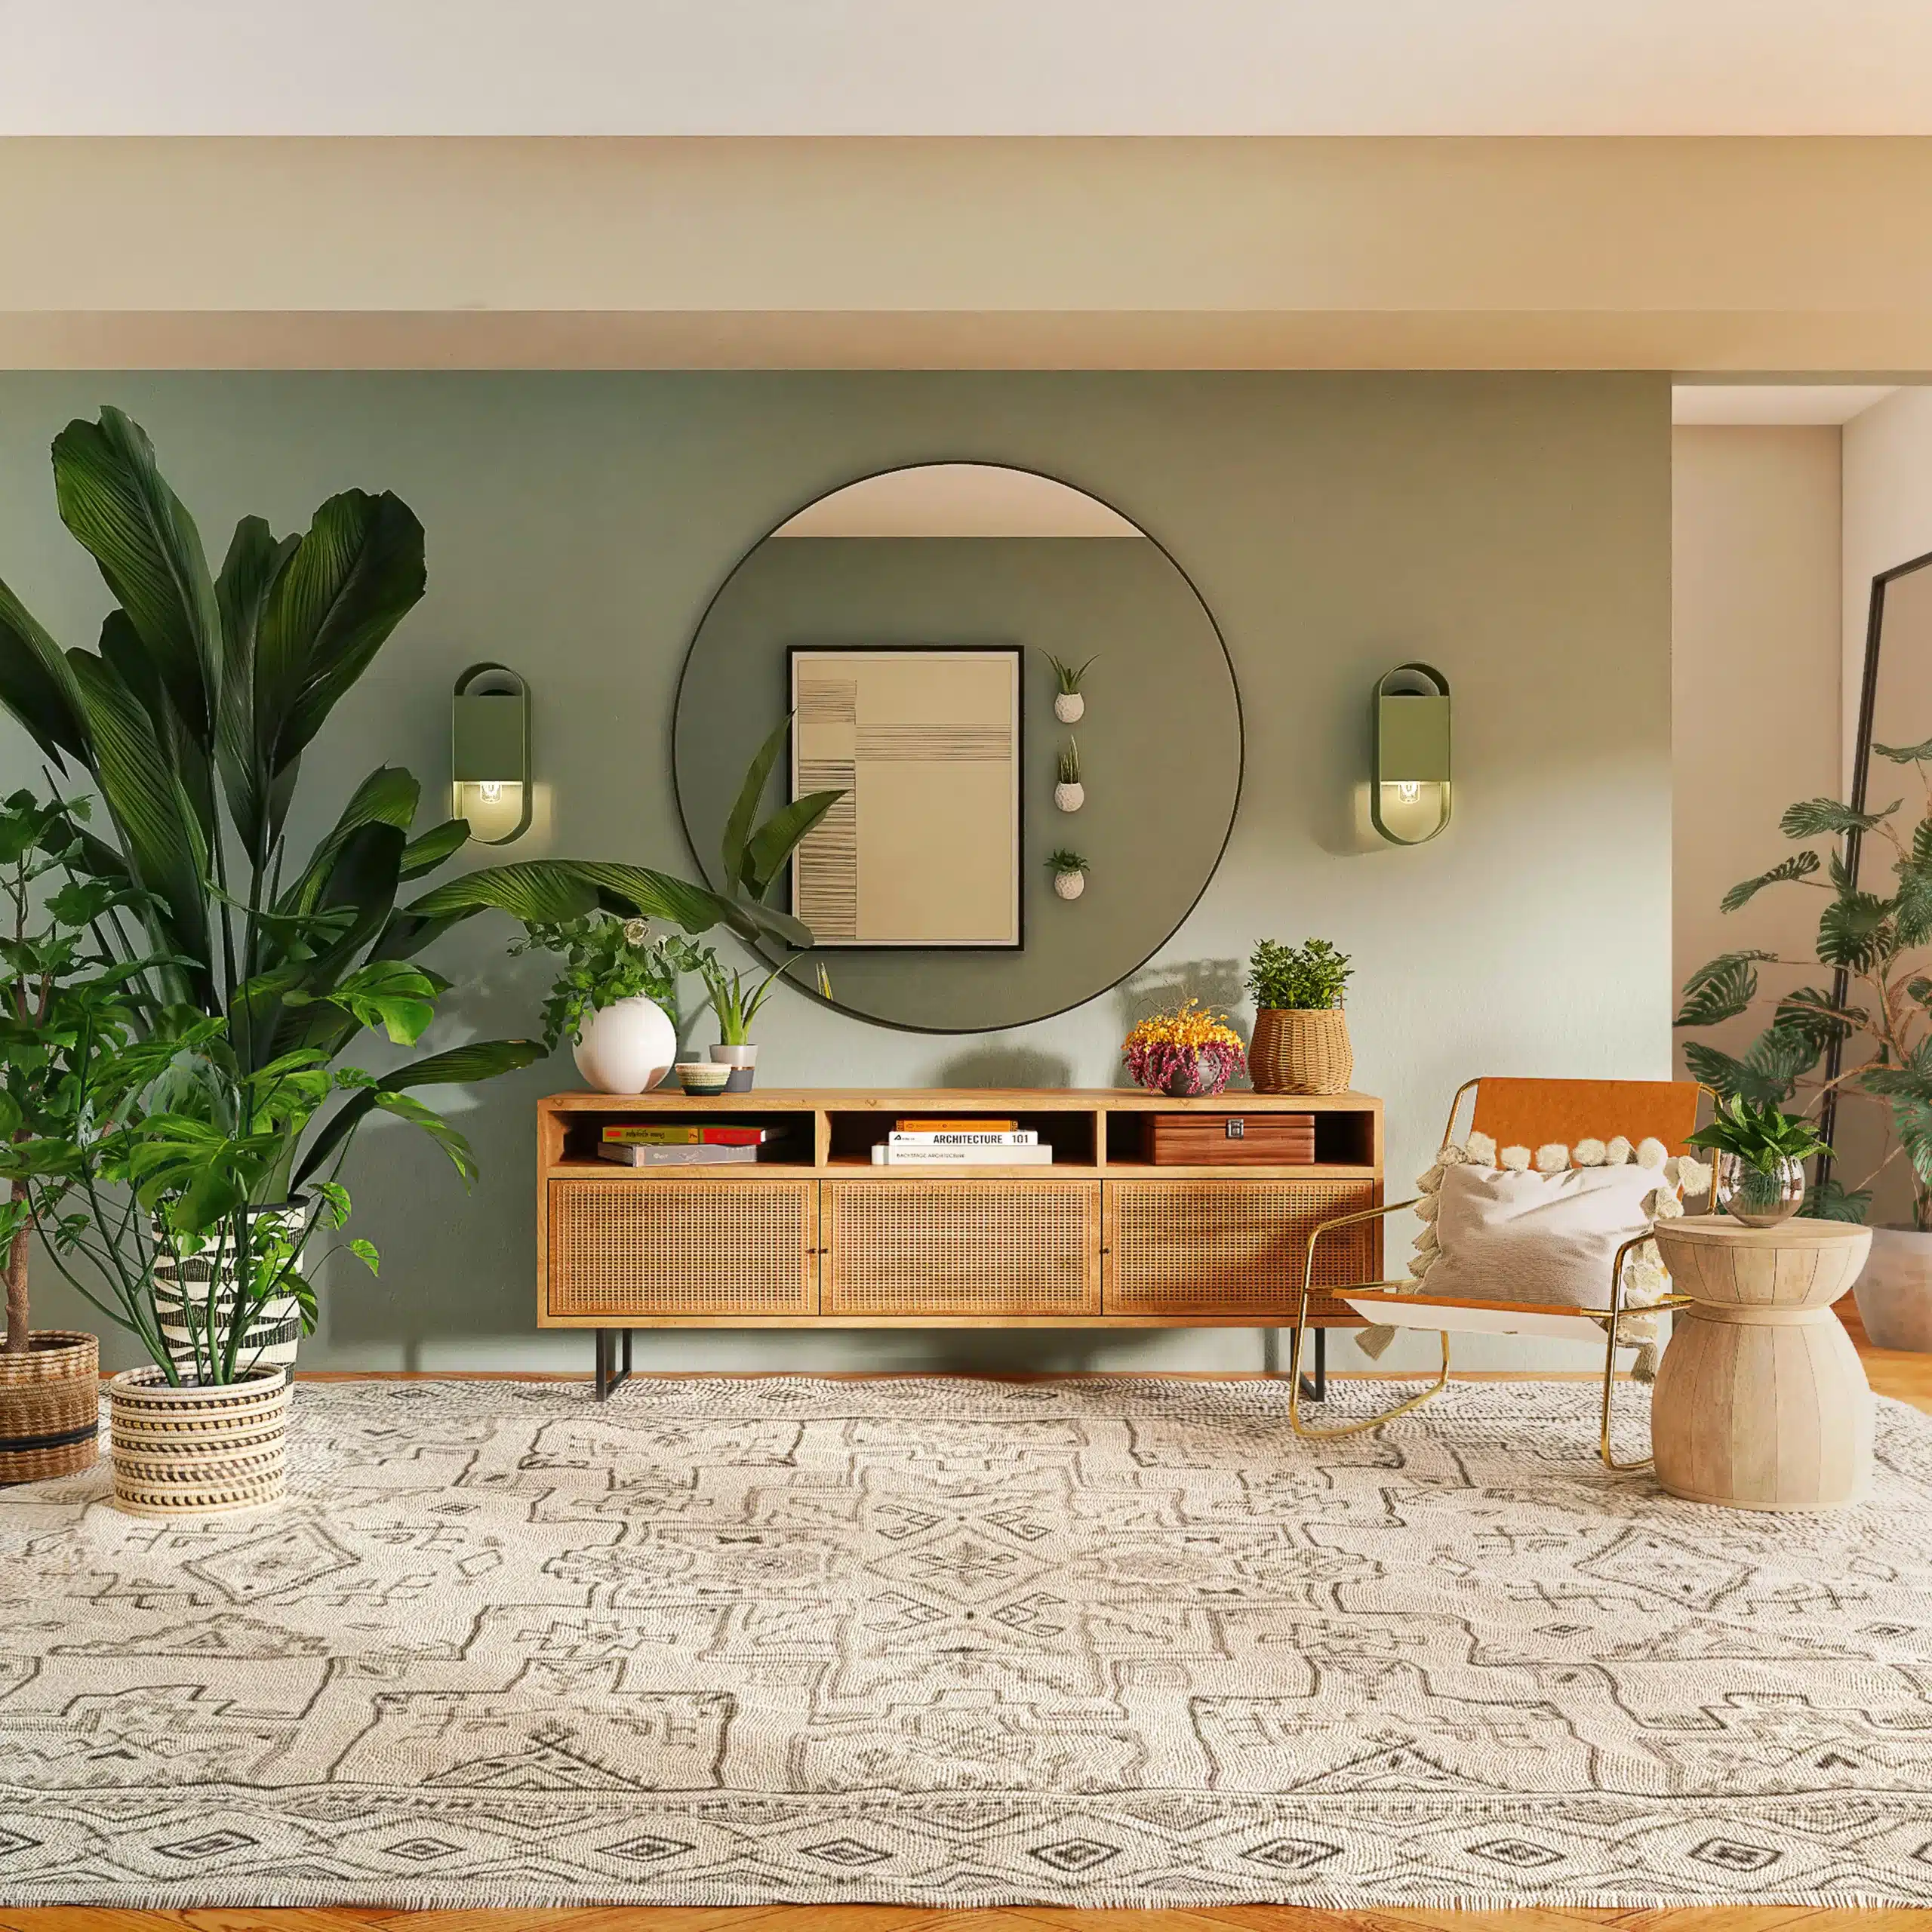 10 Home Decor Ideas to Transform Your Living Space